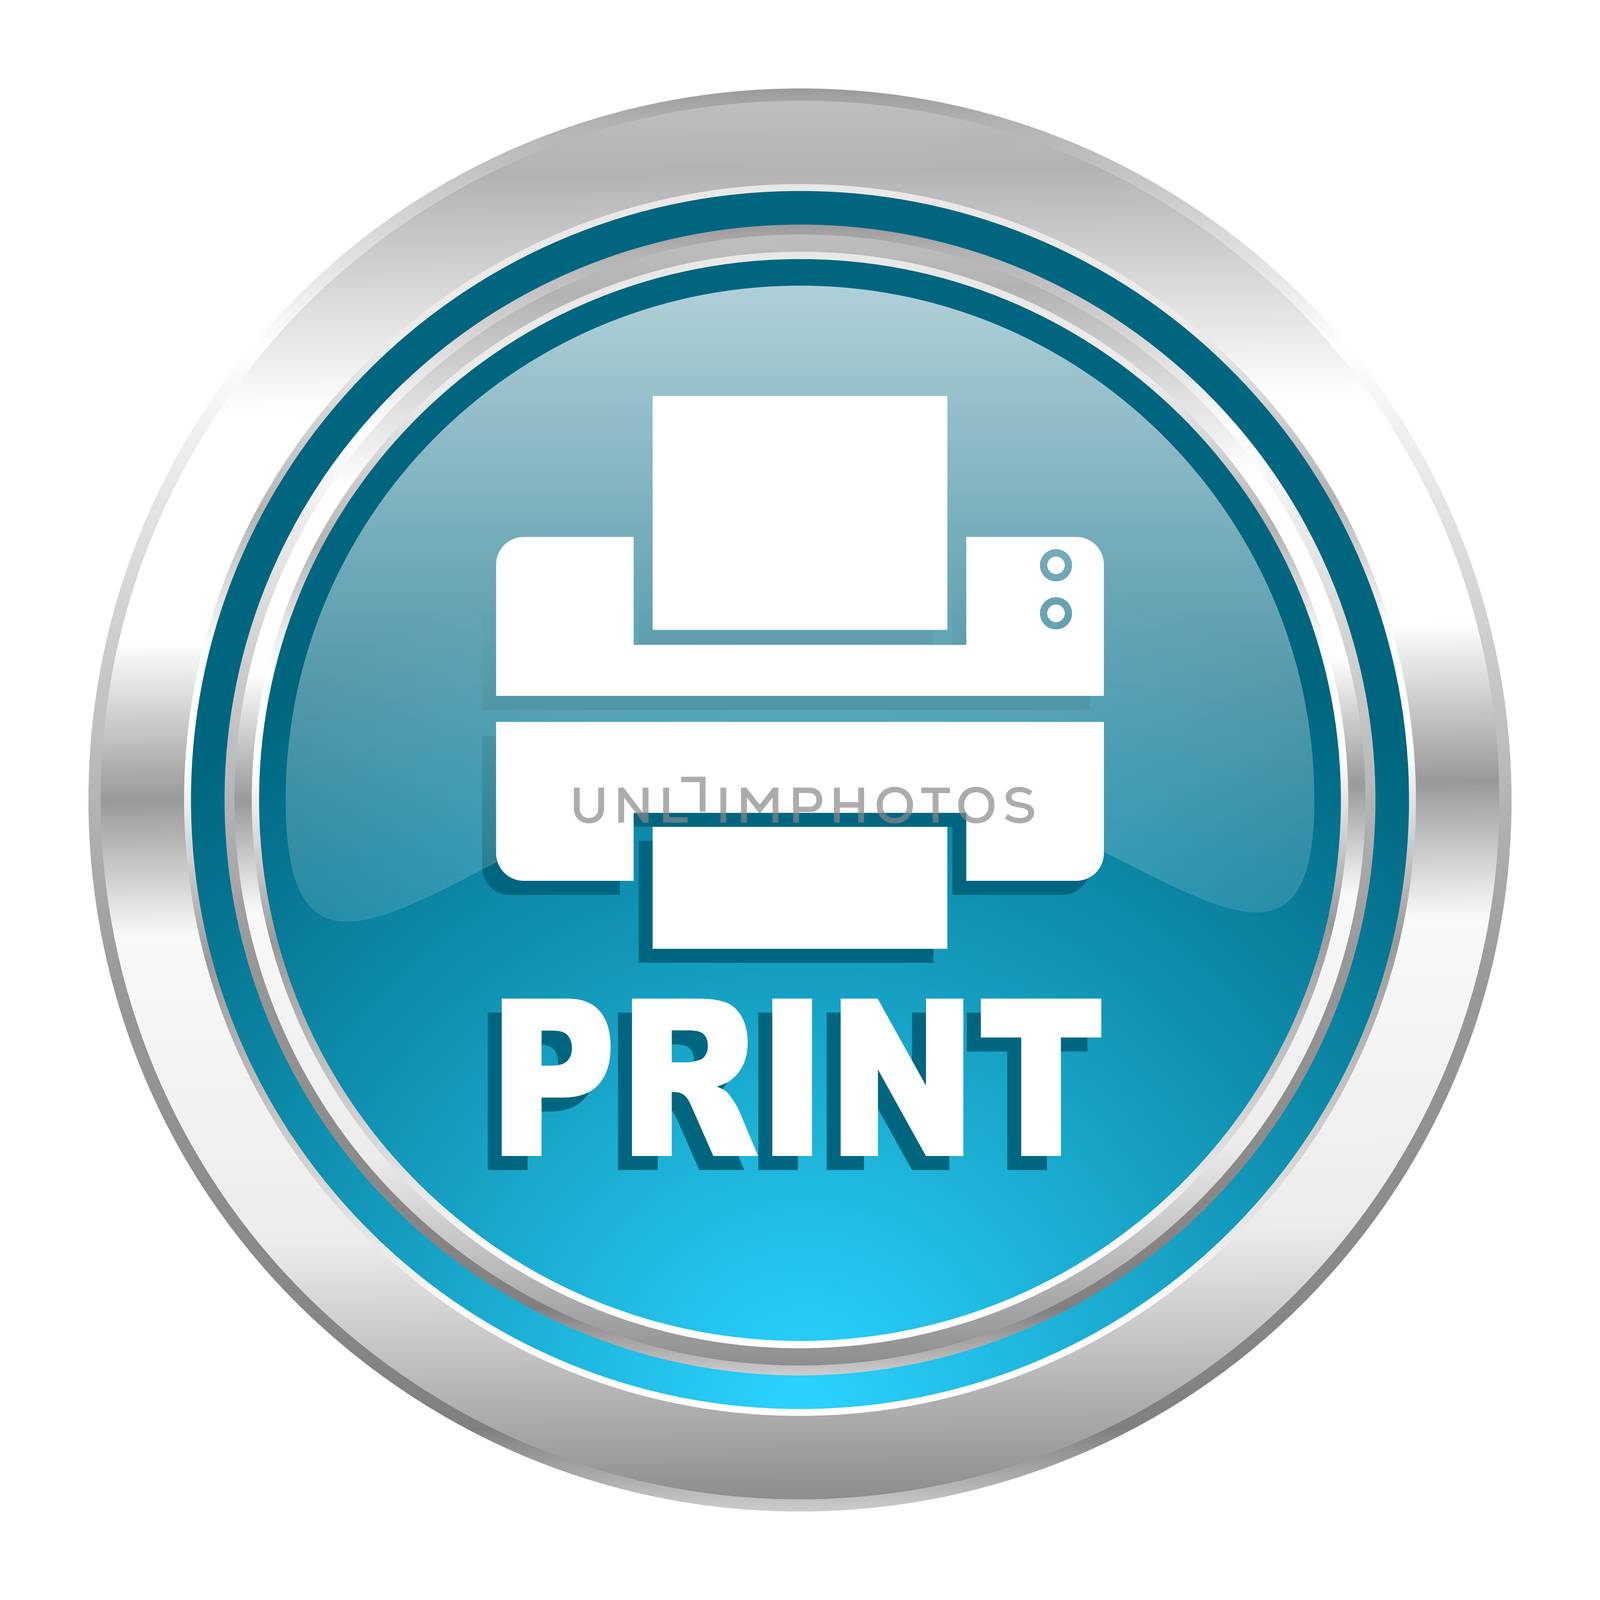 printer icon, print sign by alexwhite